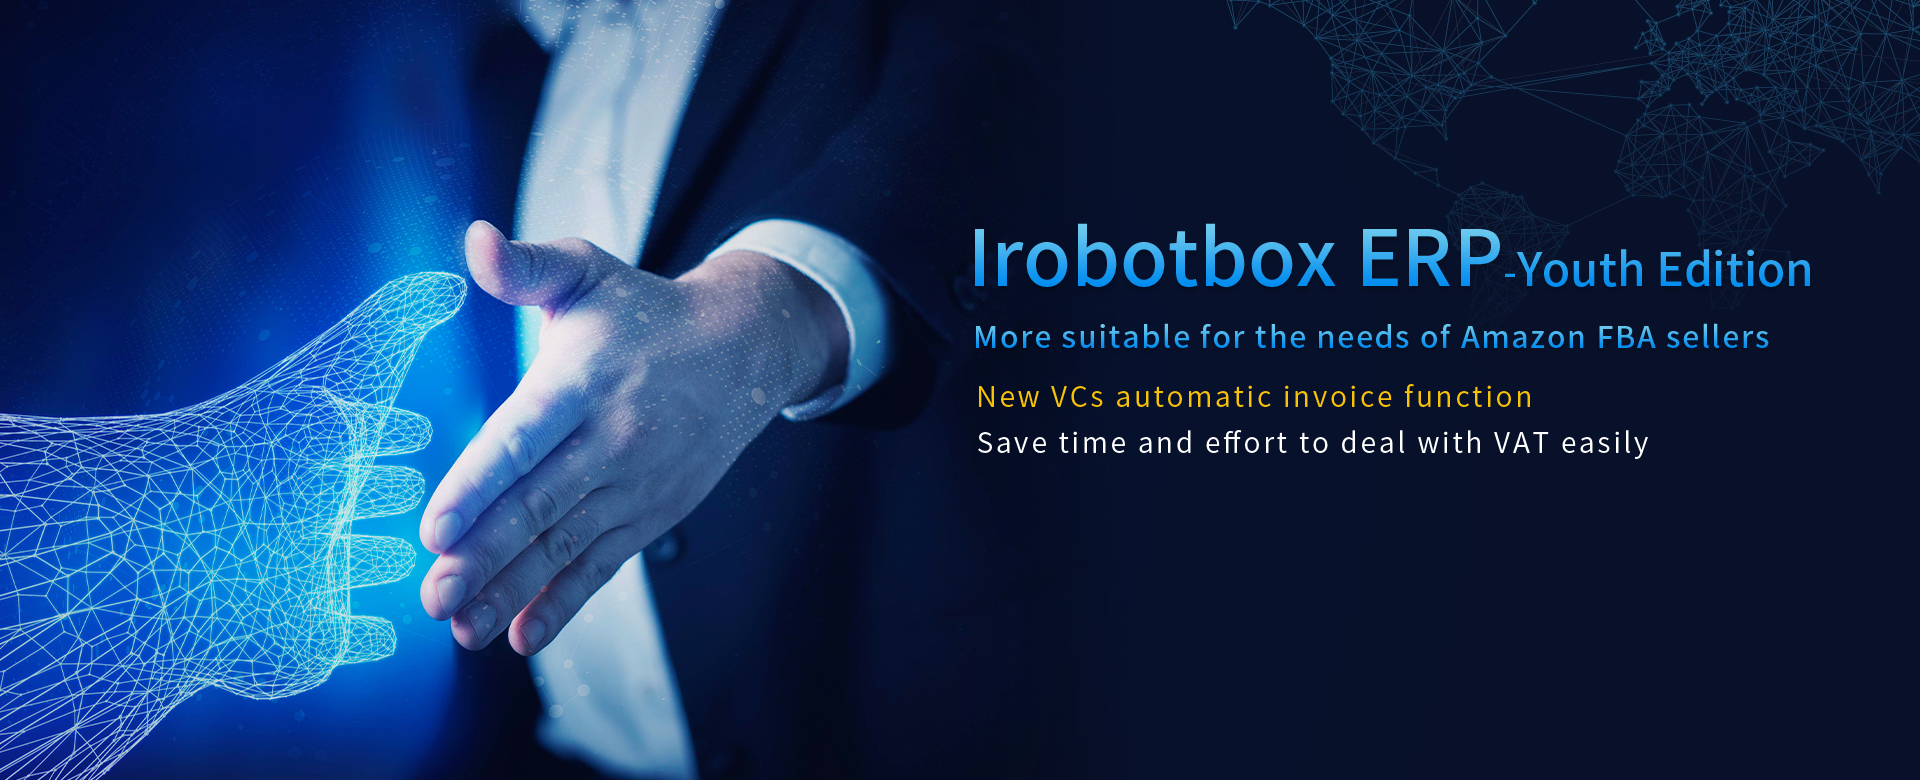 Irobotbox ERP-Youth Edition